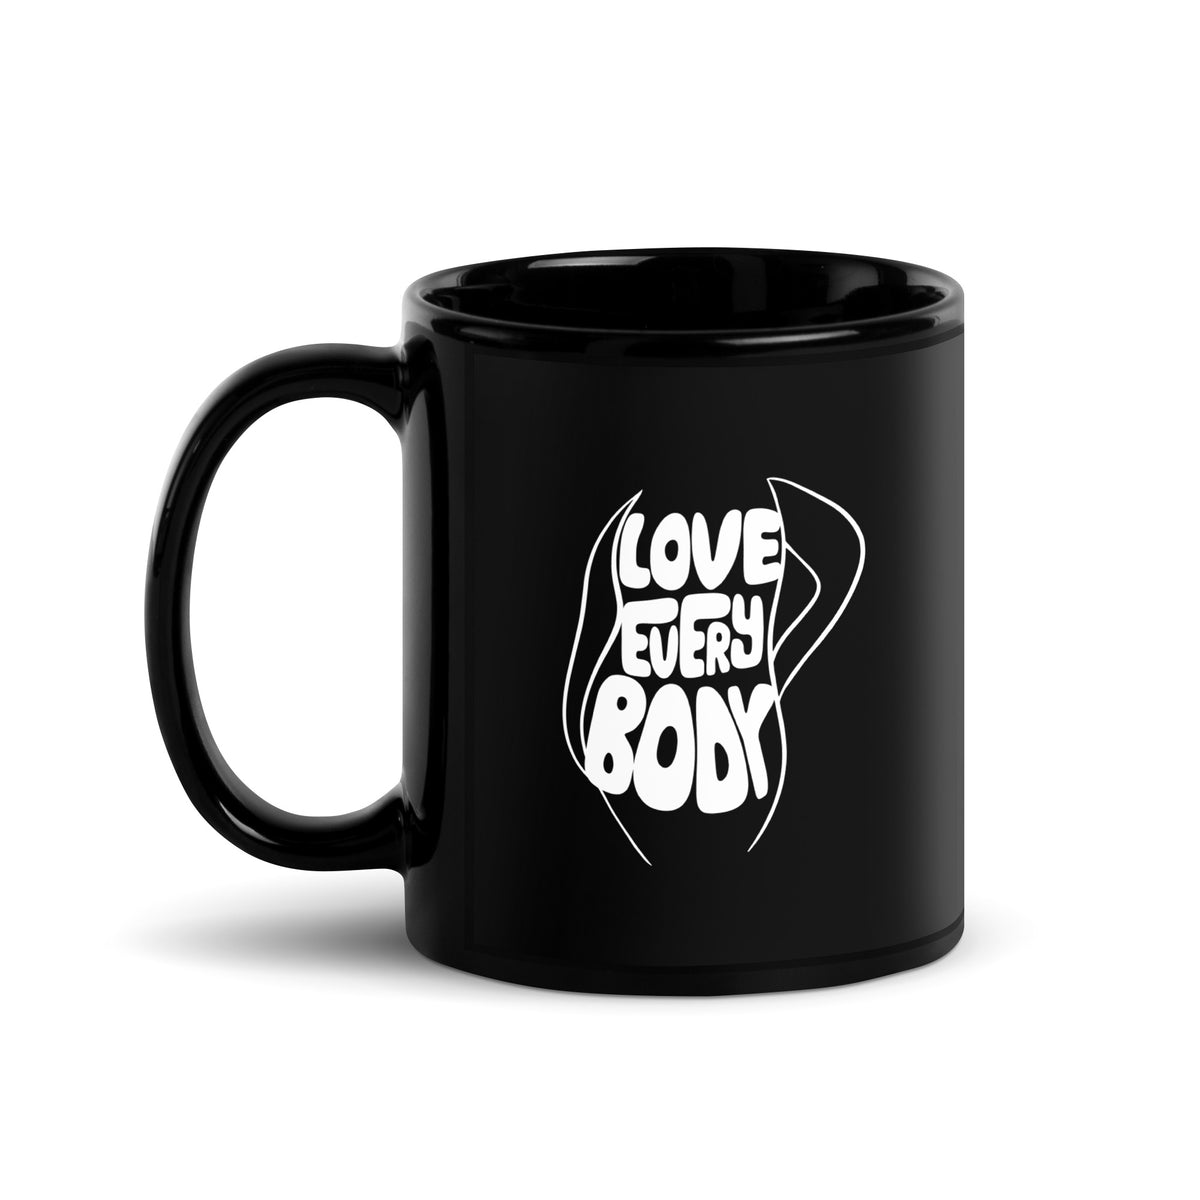 Love Every Body Mug